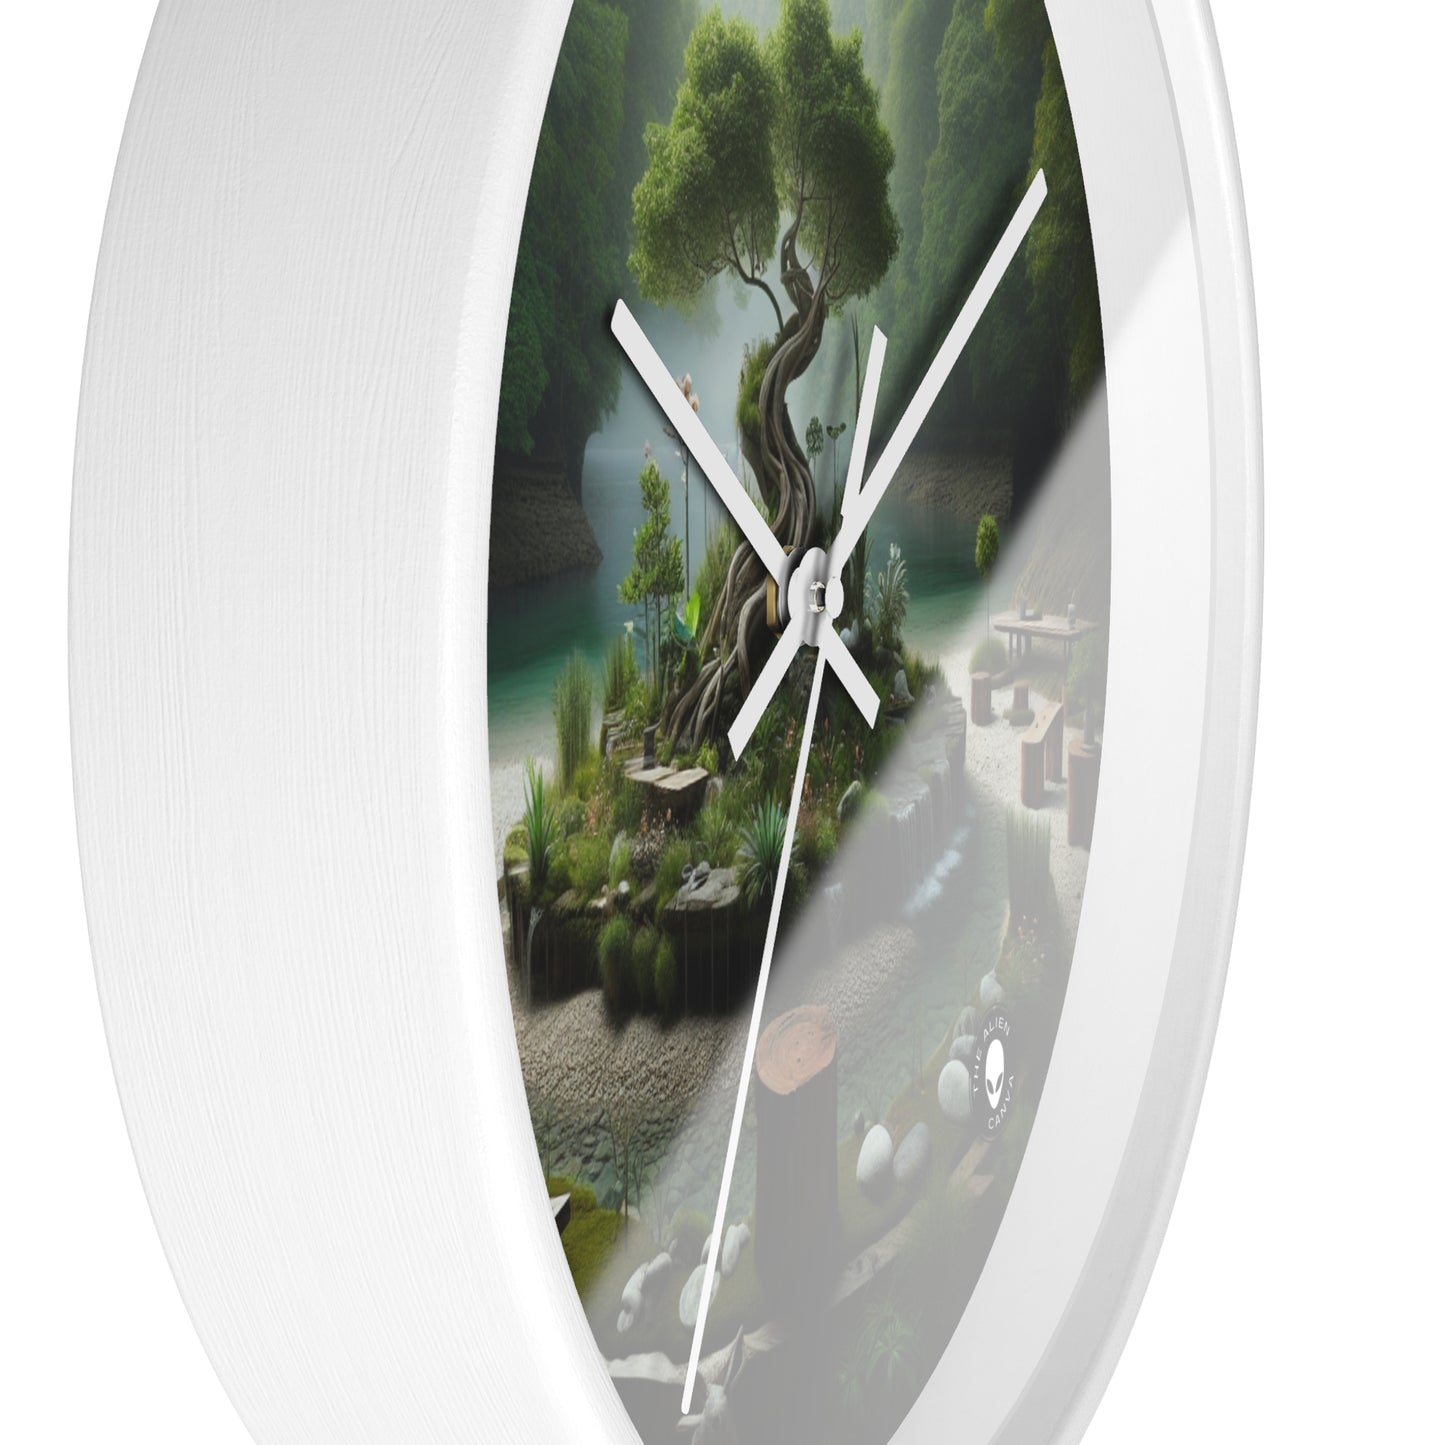 "Renewal Recycled: An Interactive Environmental Sculpture" - The Alien Wall Clock Environmental Sculpture